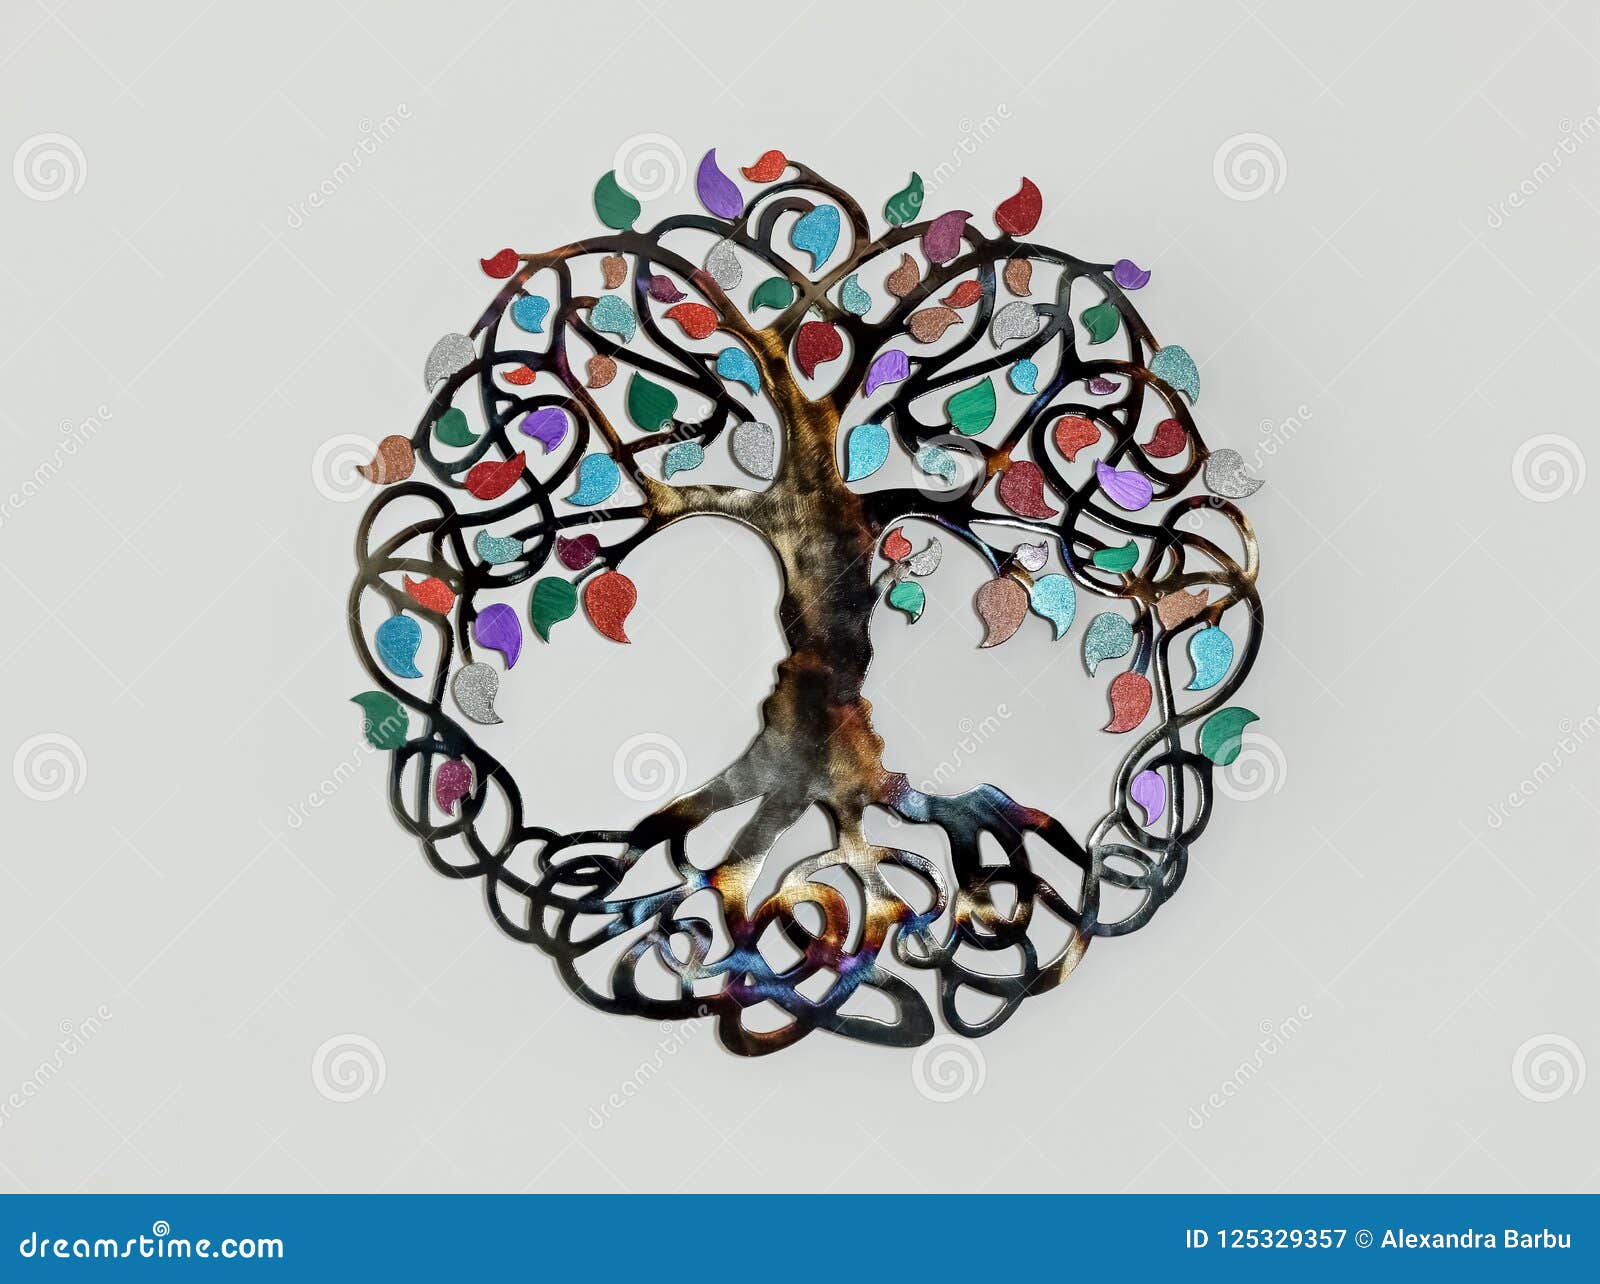 the tree of life spiritual  decoration